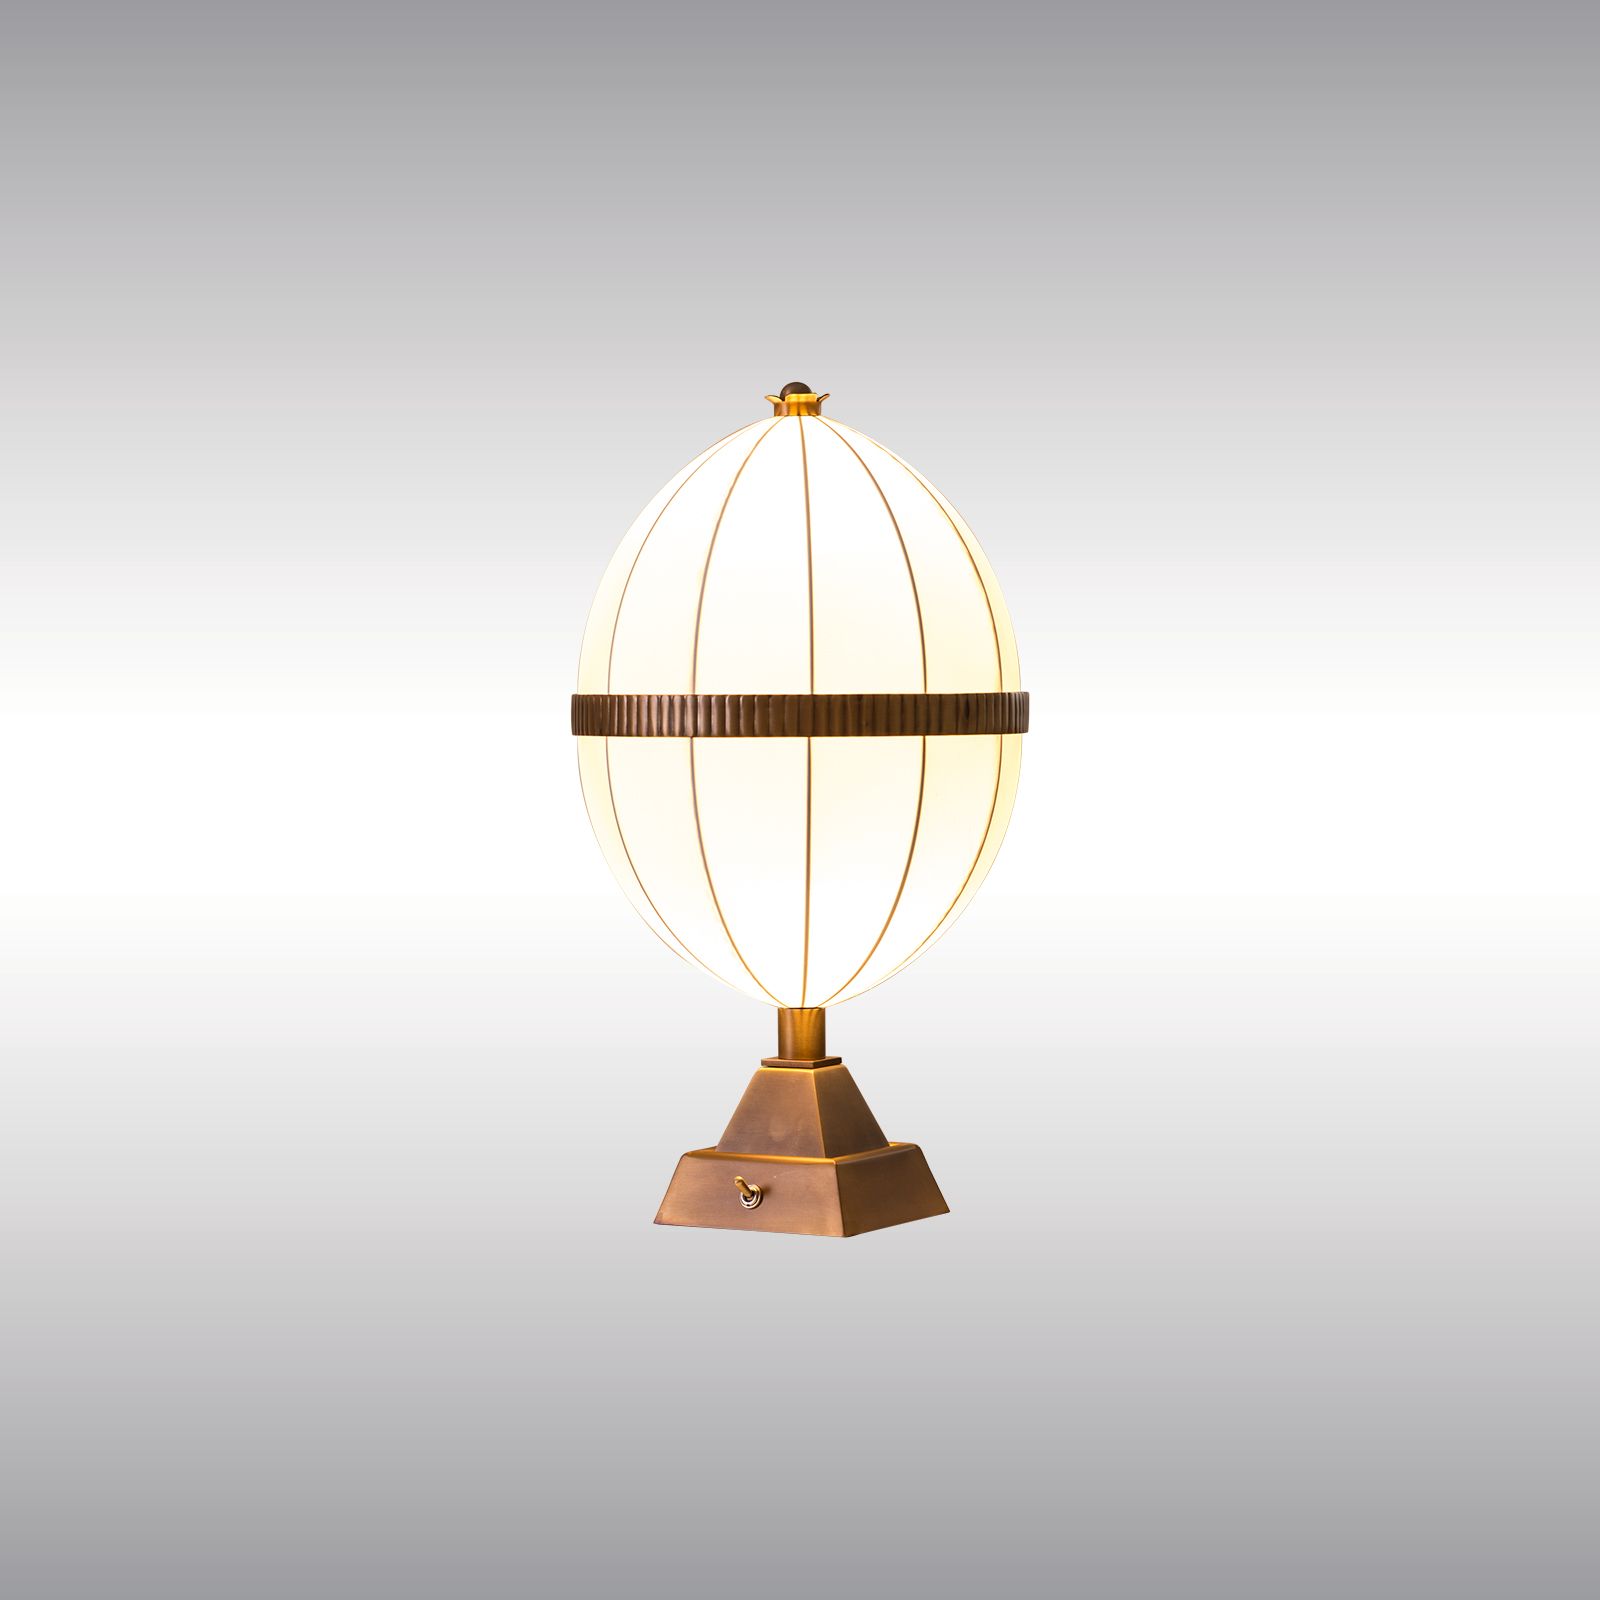 WOKA LAMPS VIENNA - OrderNr.: 21401|Moldauer Table - Design: Josef Hoffmann